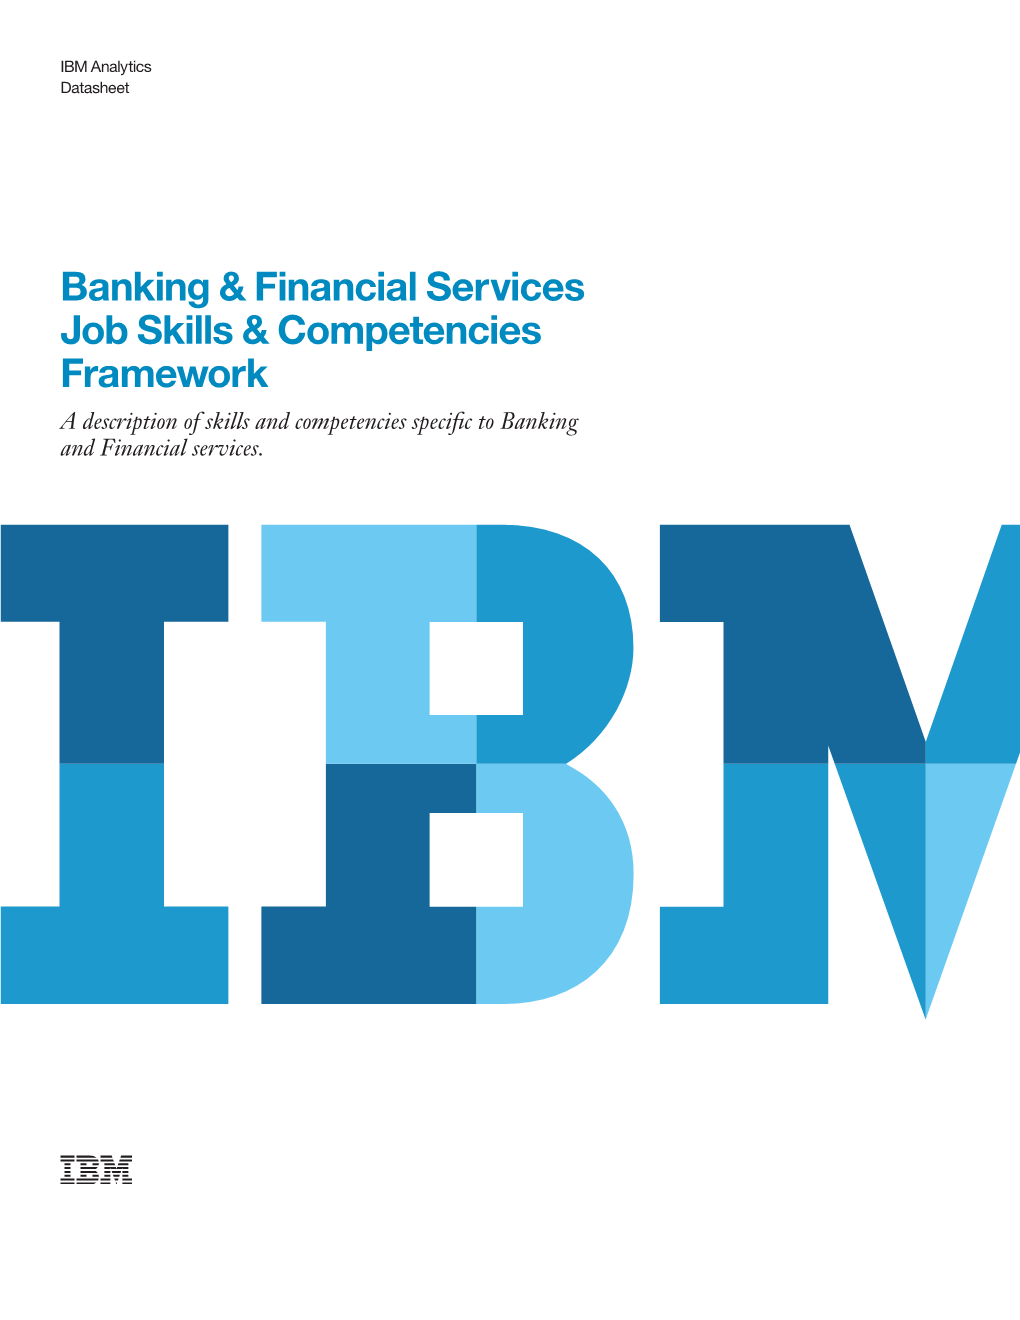 Banking & Financial Services Job Skills & Competencies Framework